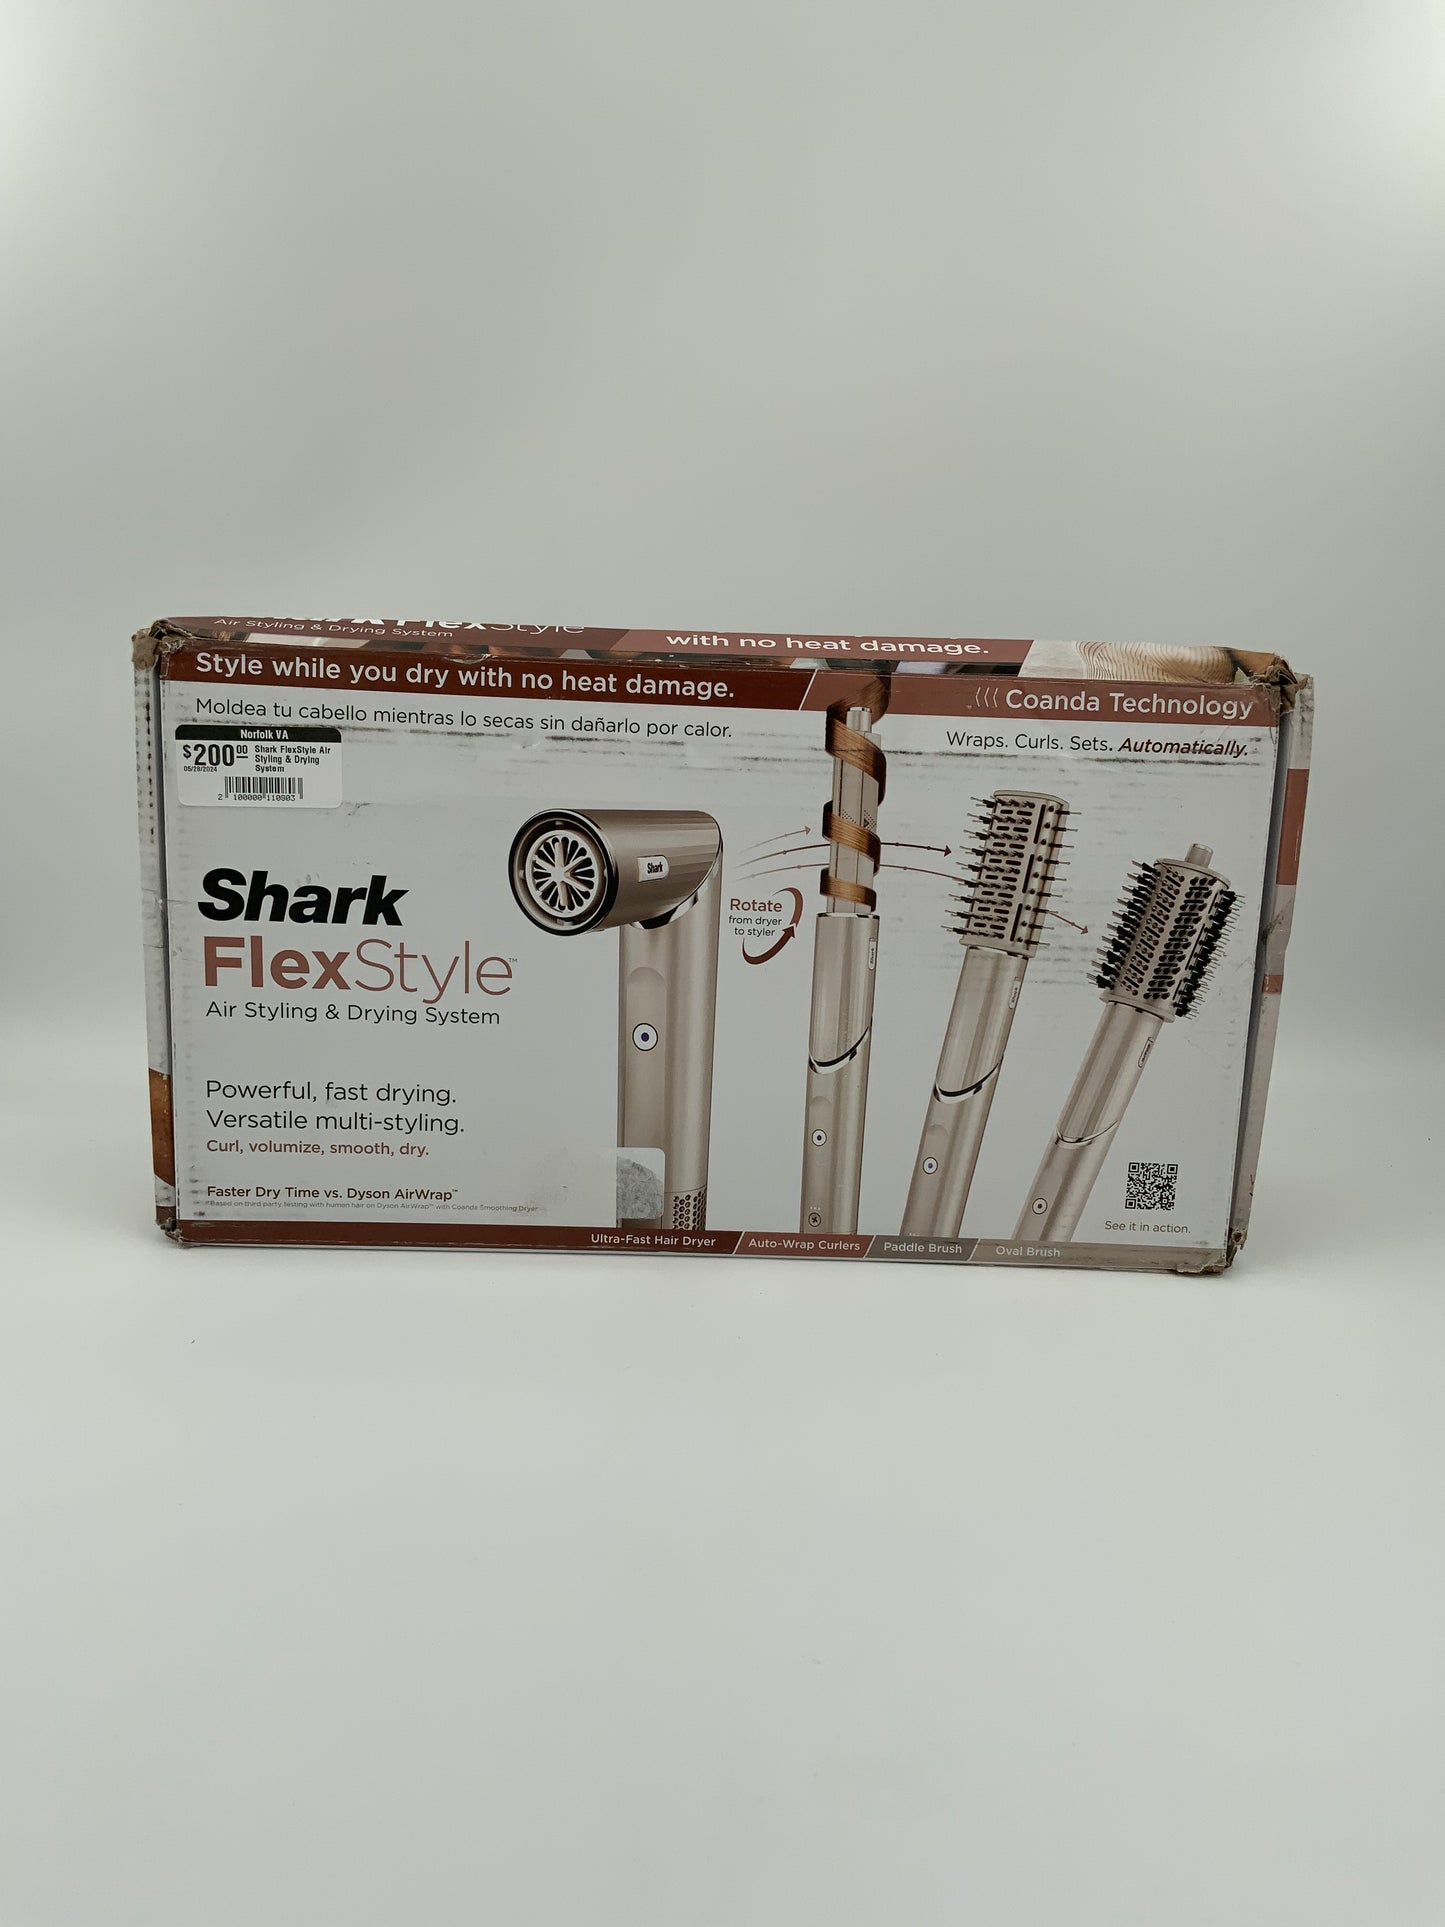 Shark HD430 FlexStyle Air Styling